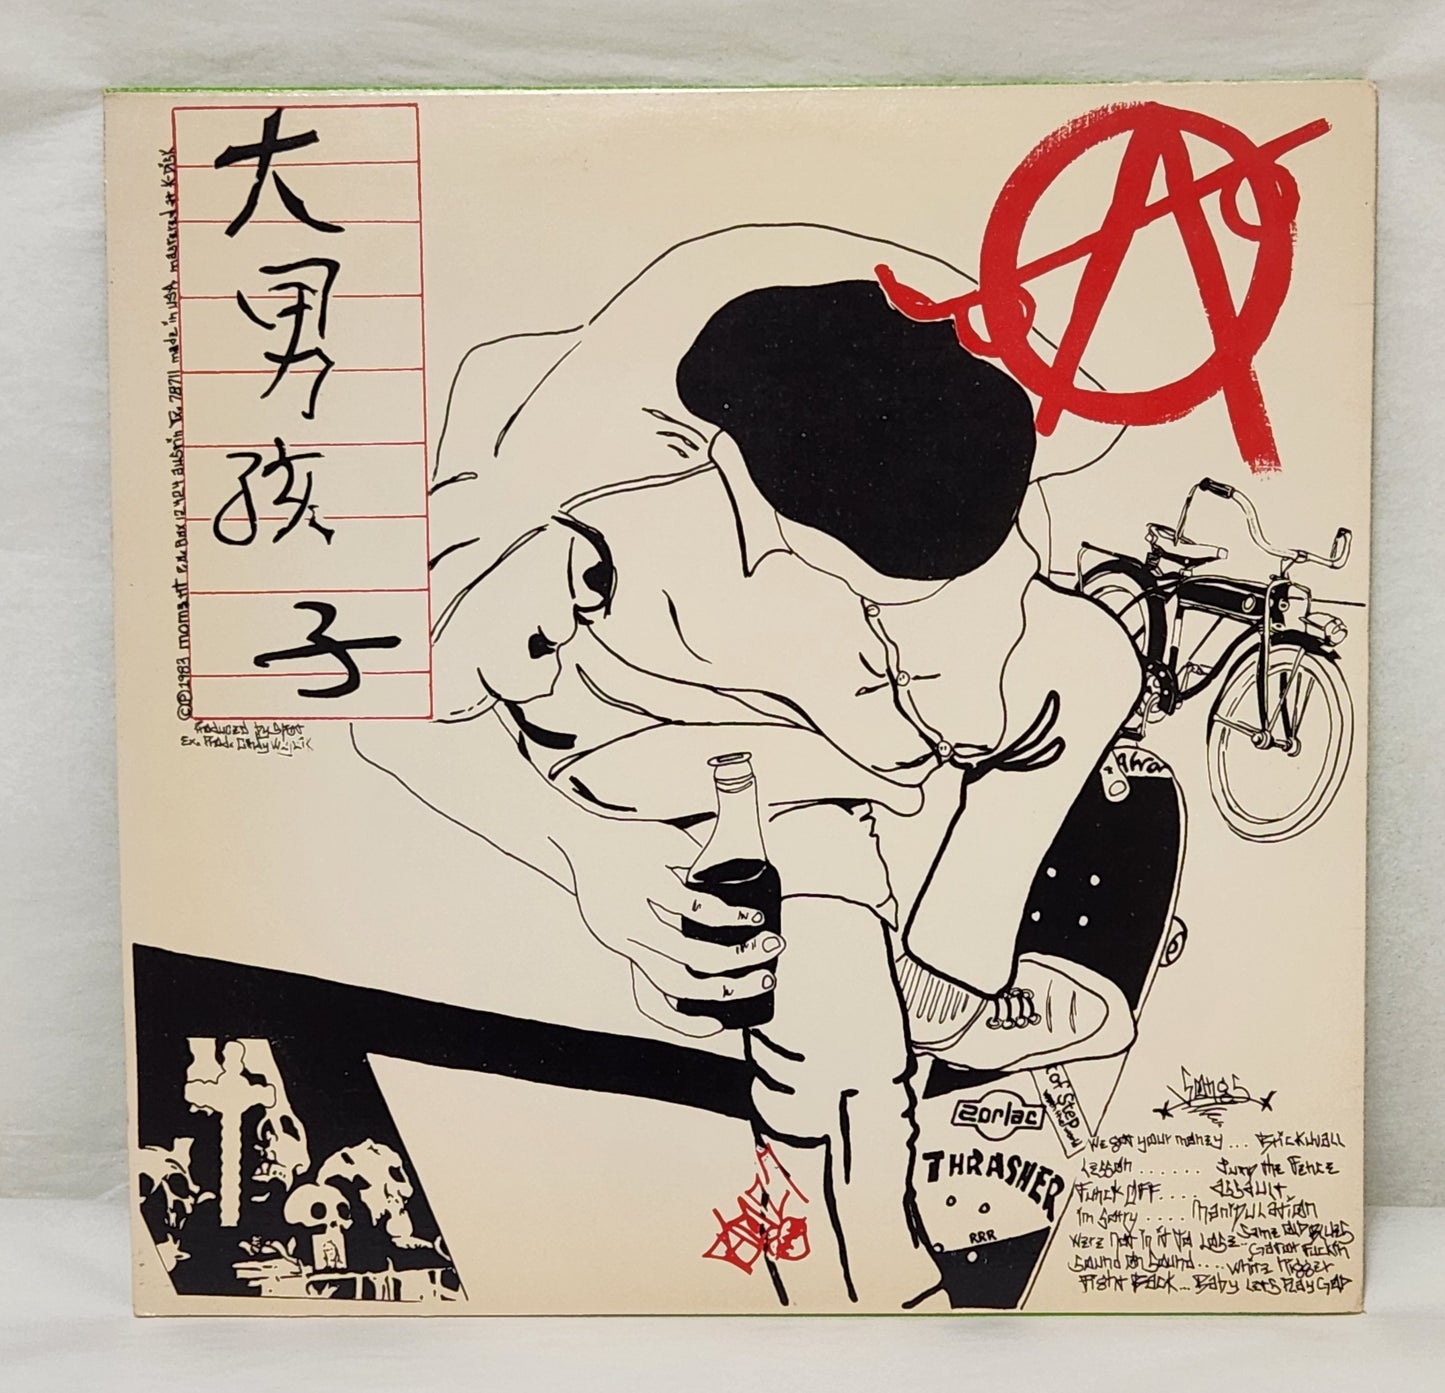 Big Boys "Lullabies Help The Brain Grow" 1983 Punk / Alt Rock Record Album